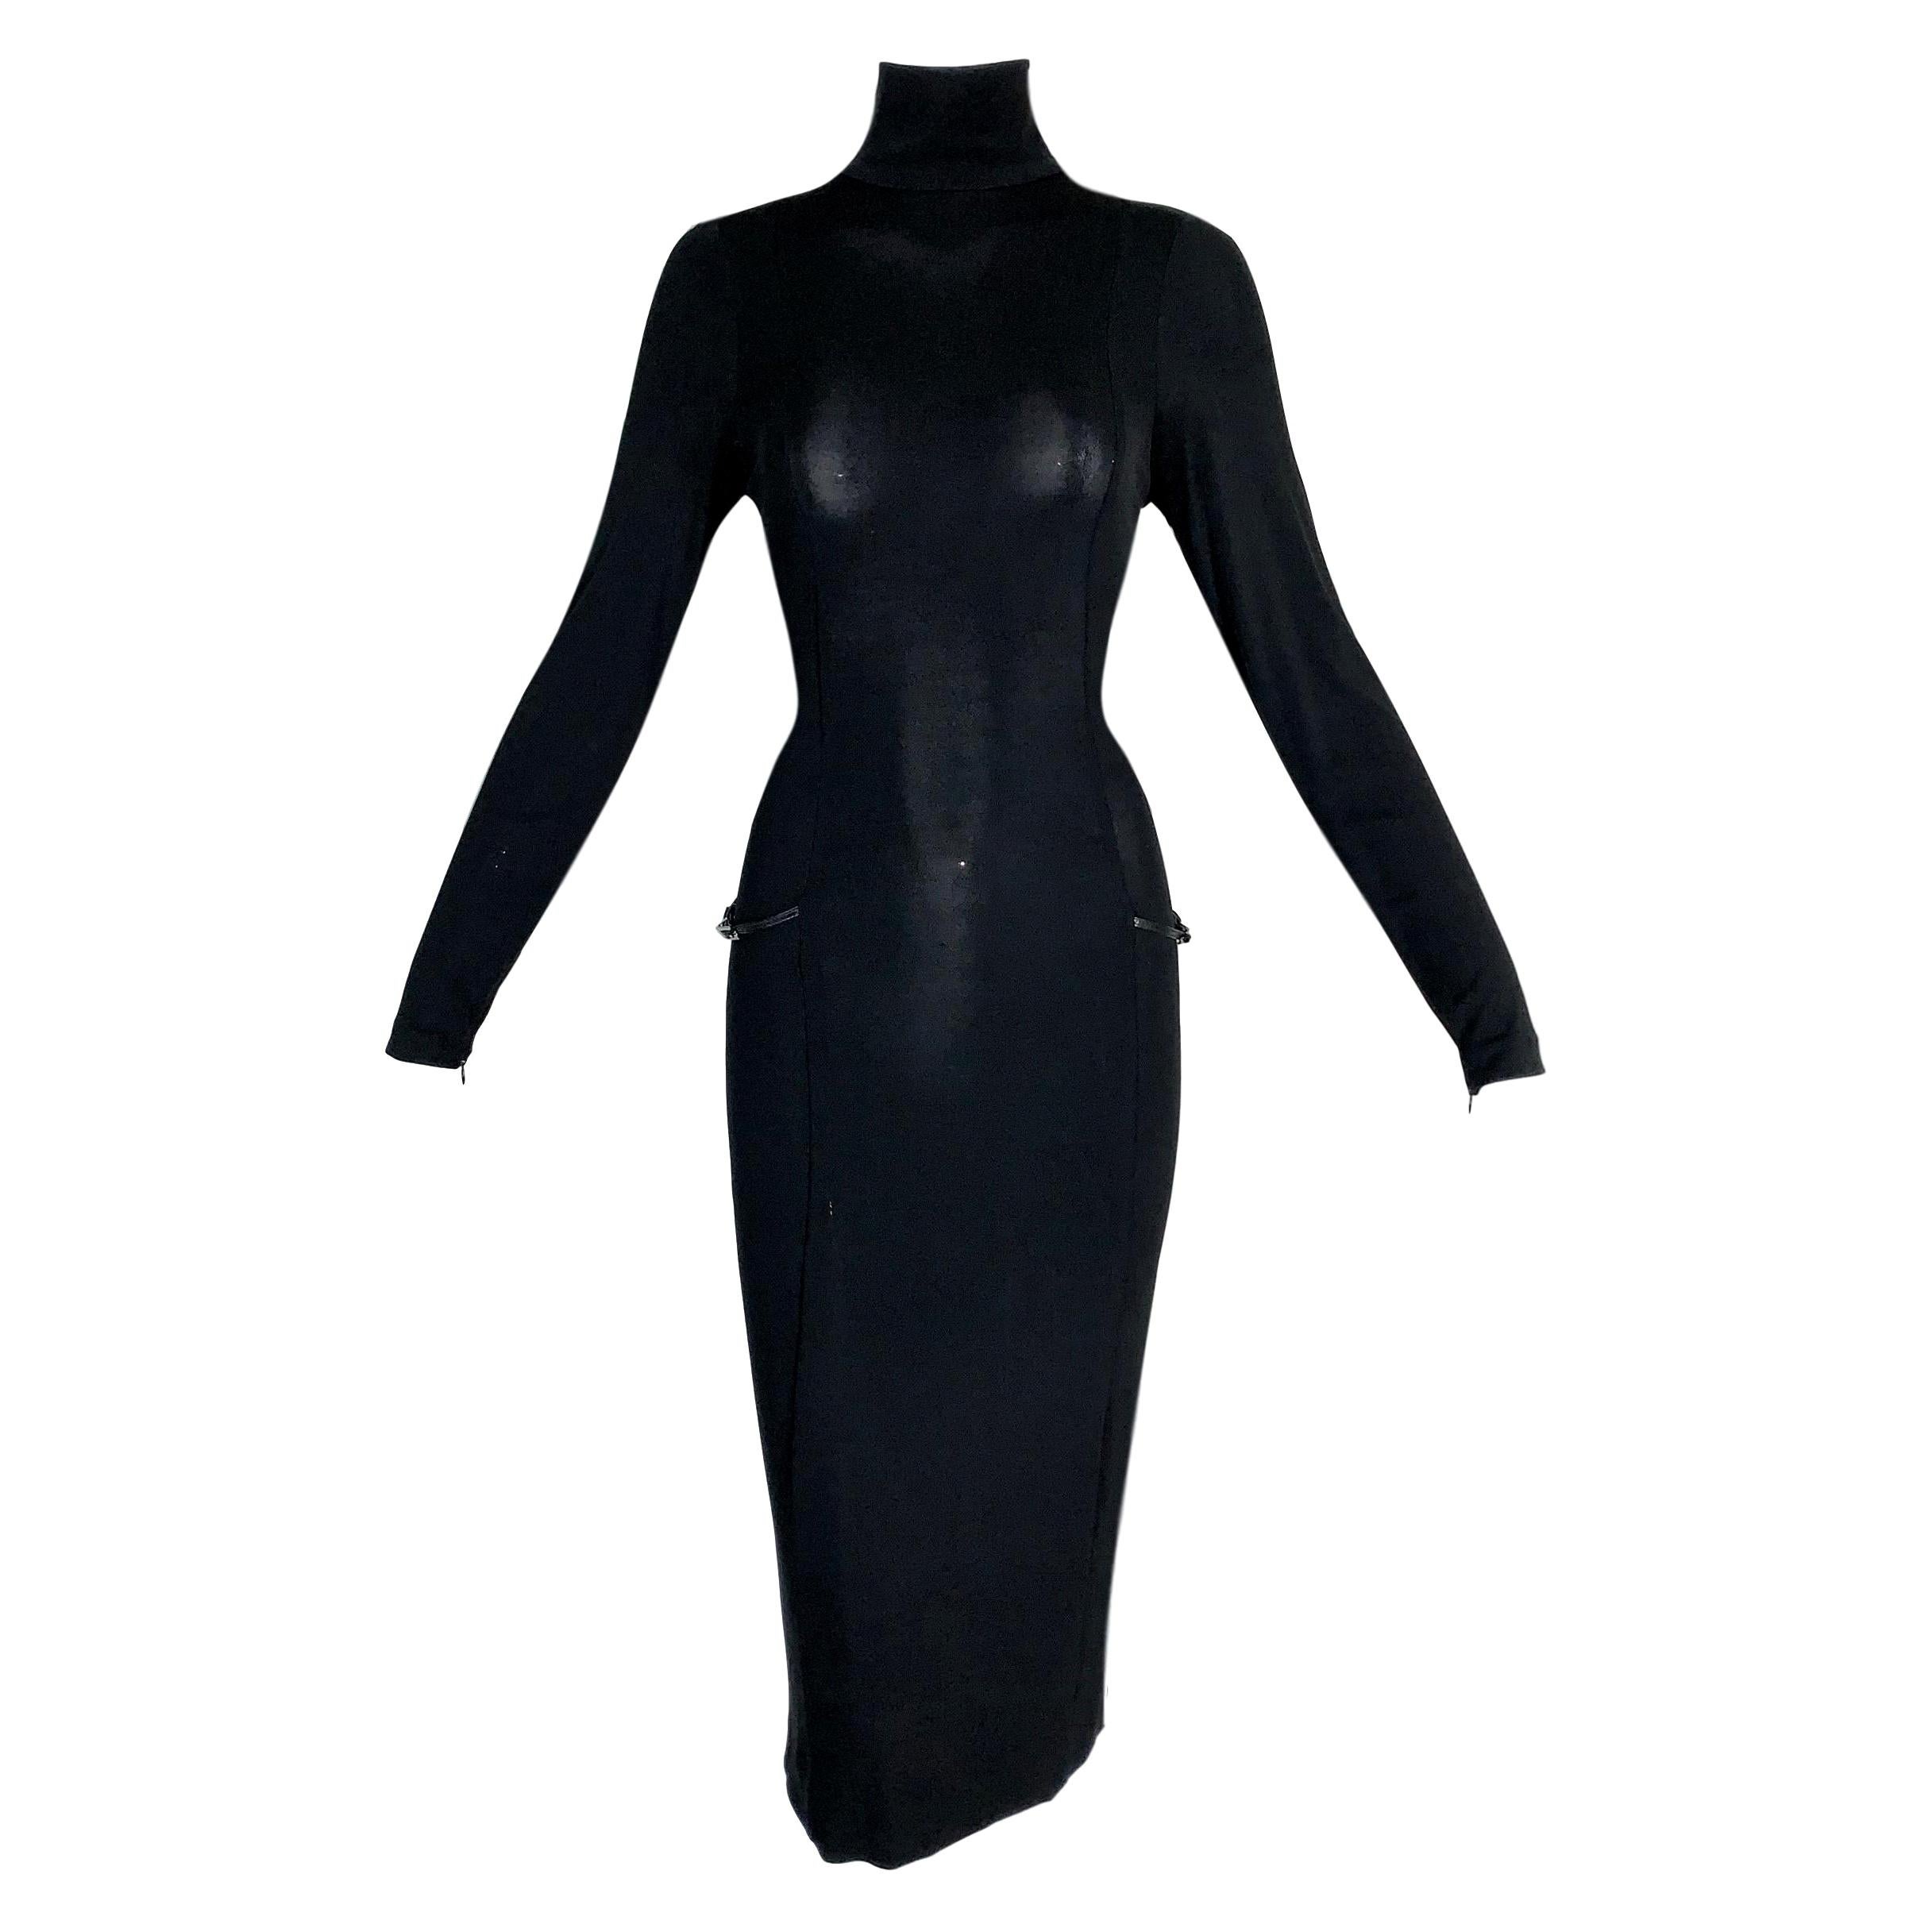 F/W 1998 Gucci by Tom Ford Semi-Sheer Bond Girl L/S Black Bodycon Dress